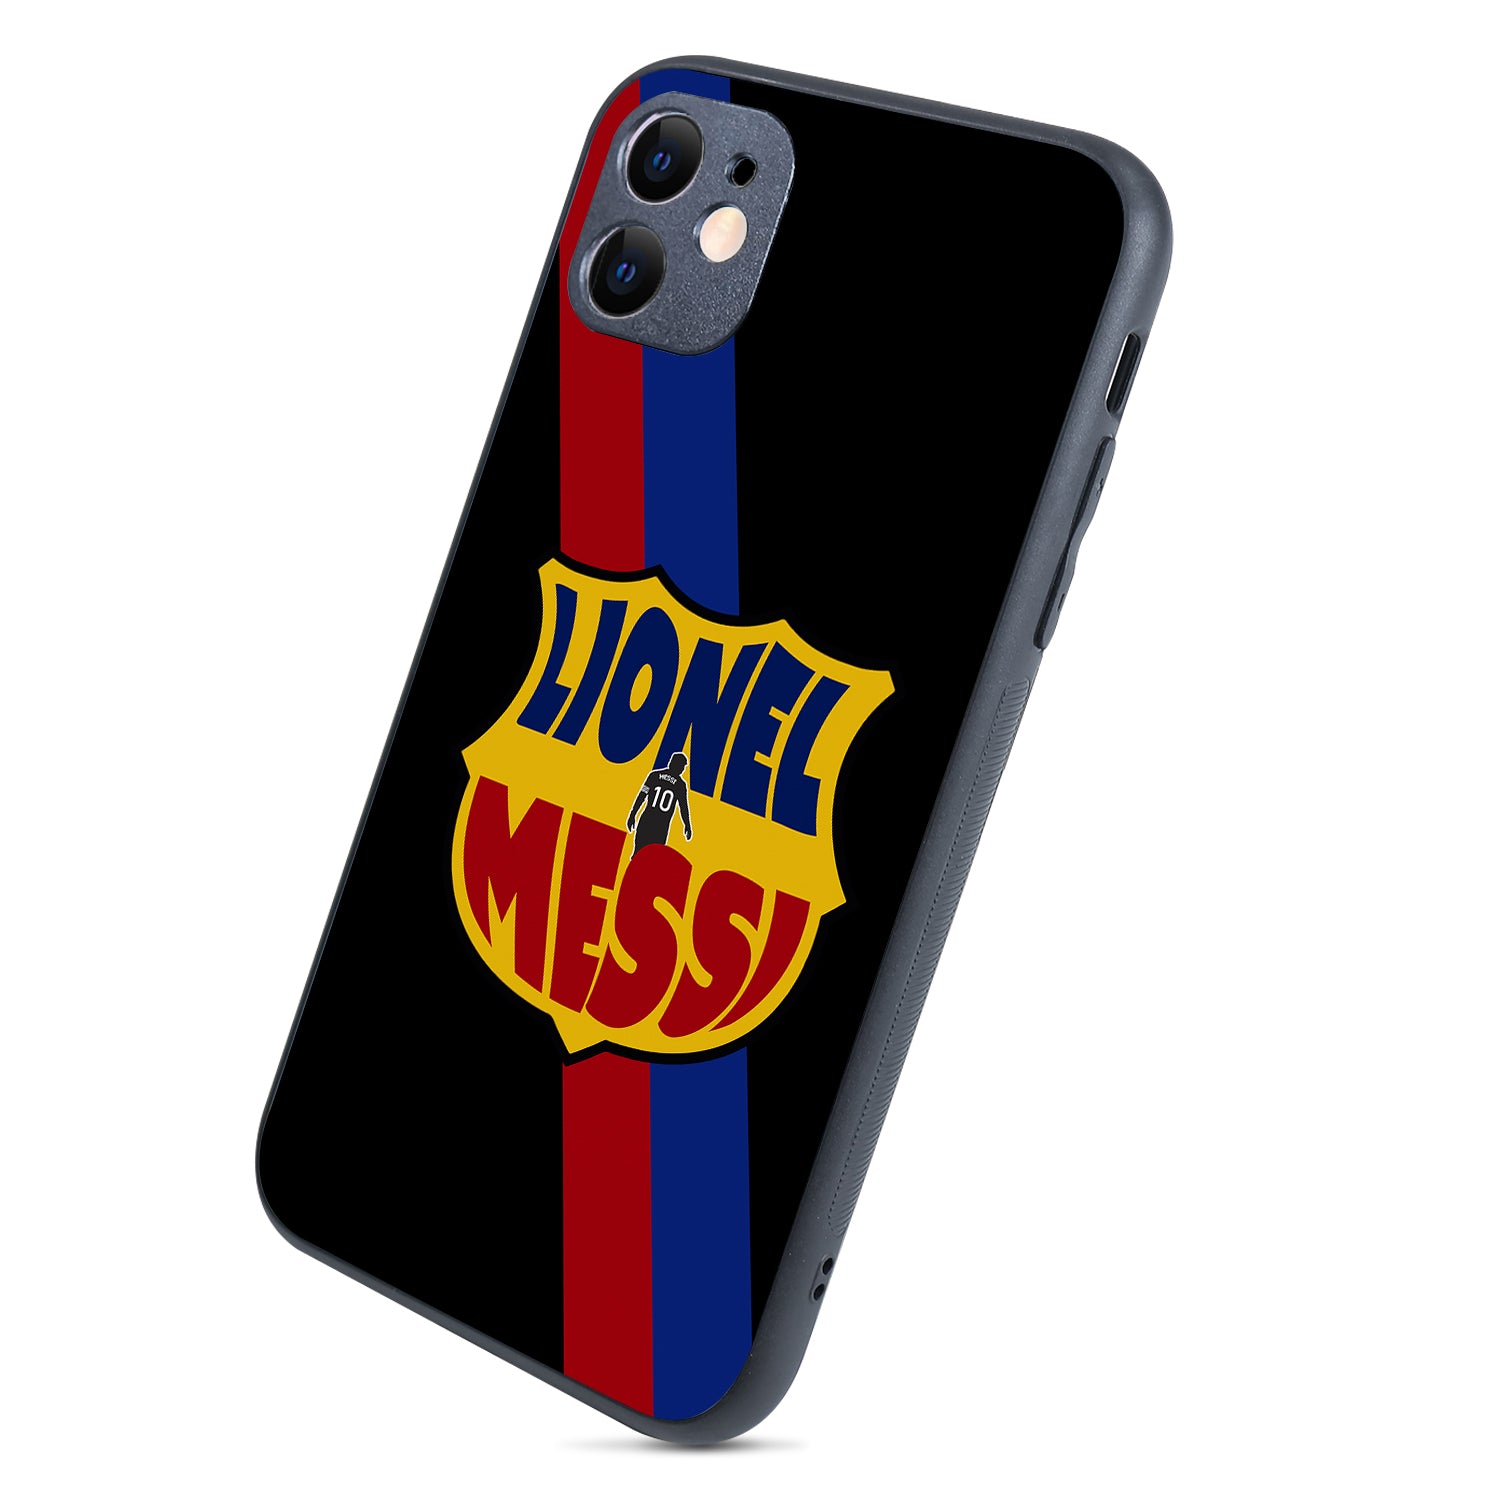 Lionel Messi Sports iPhone 11 Case